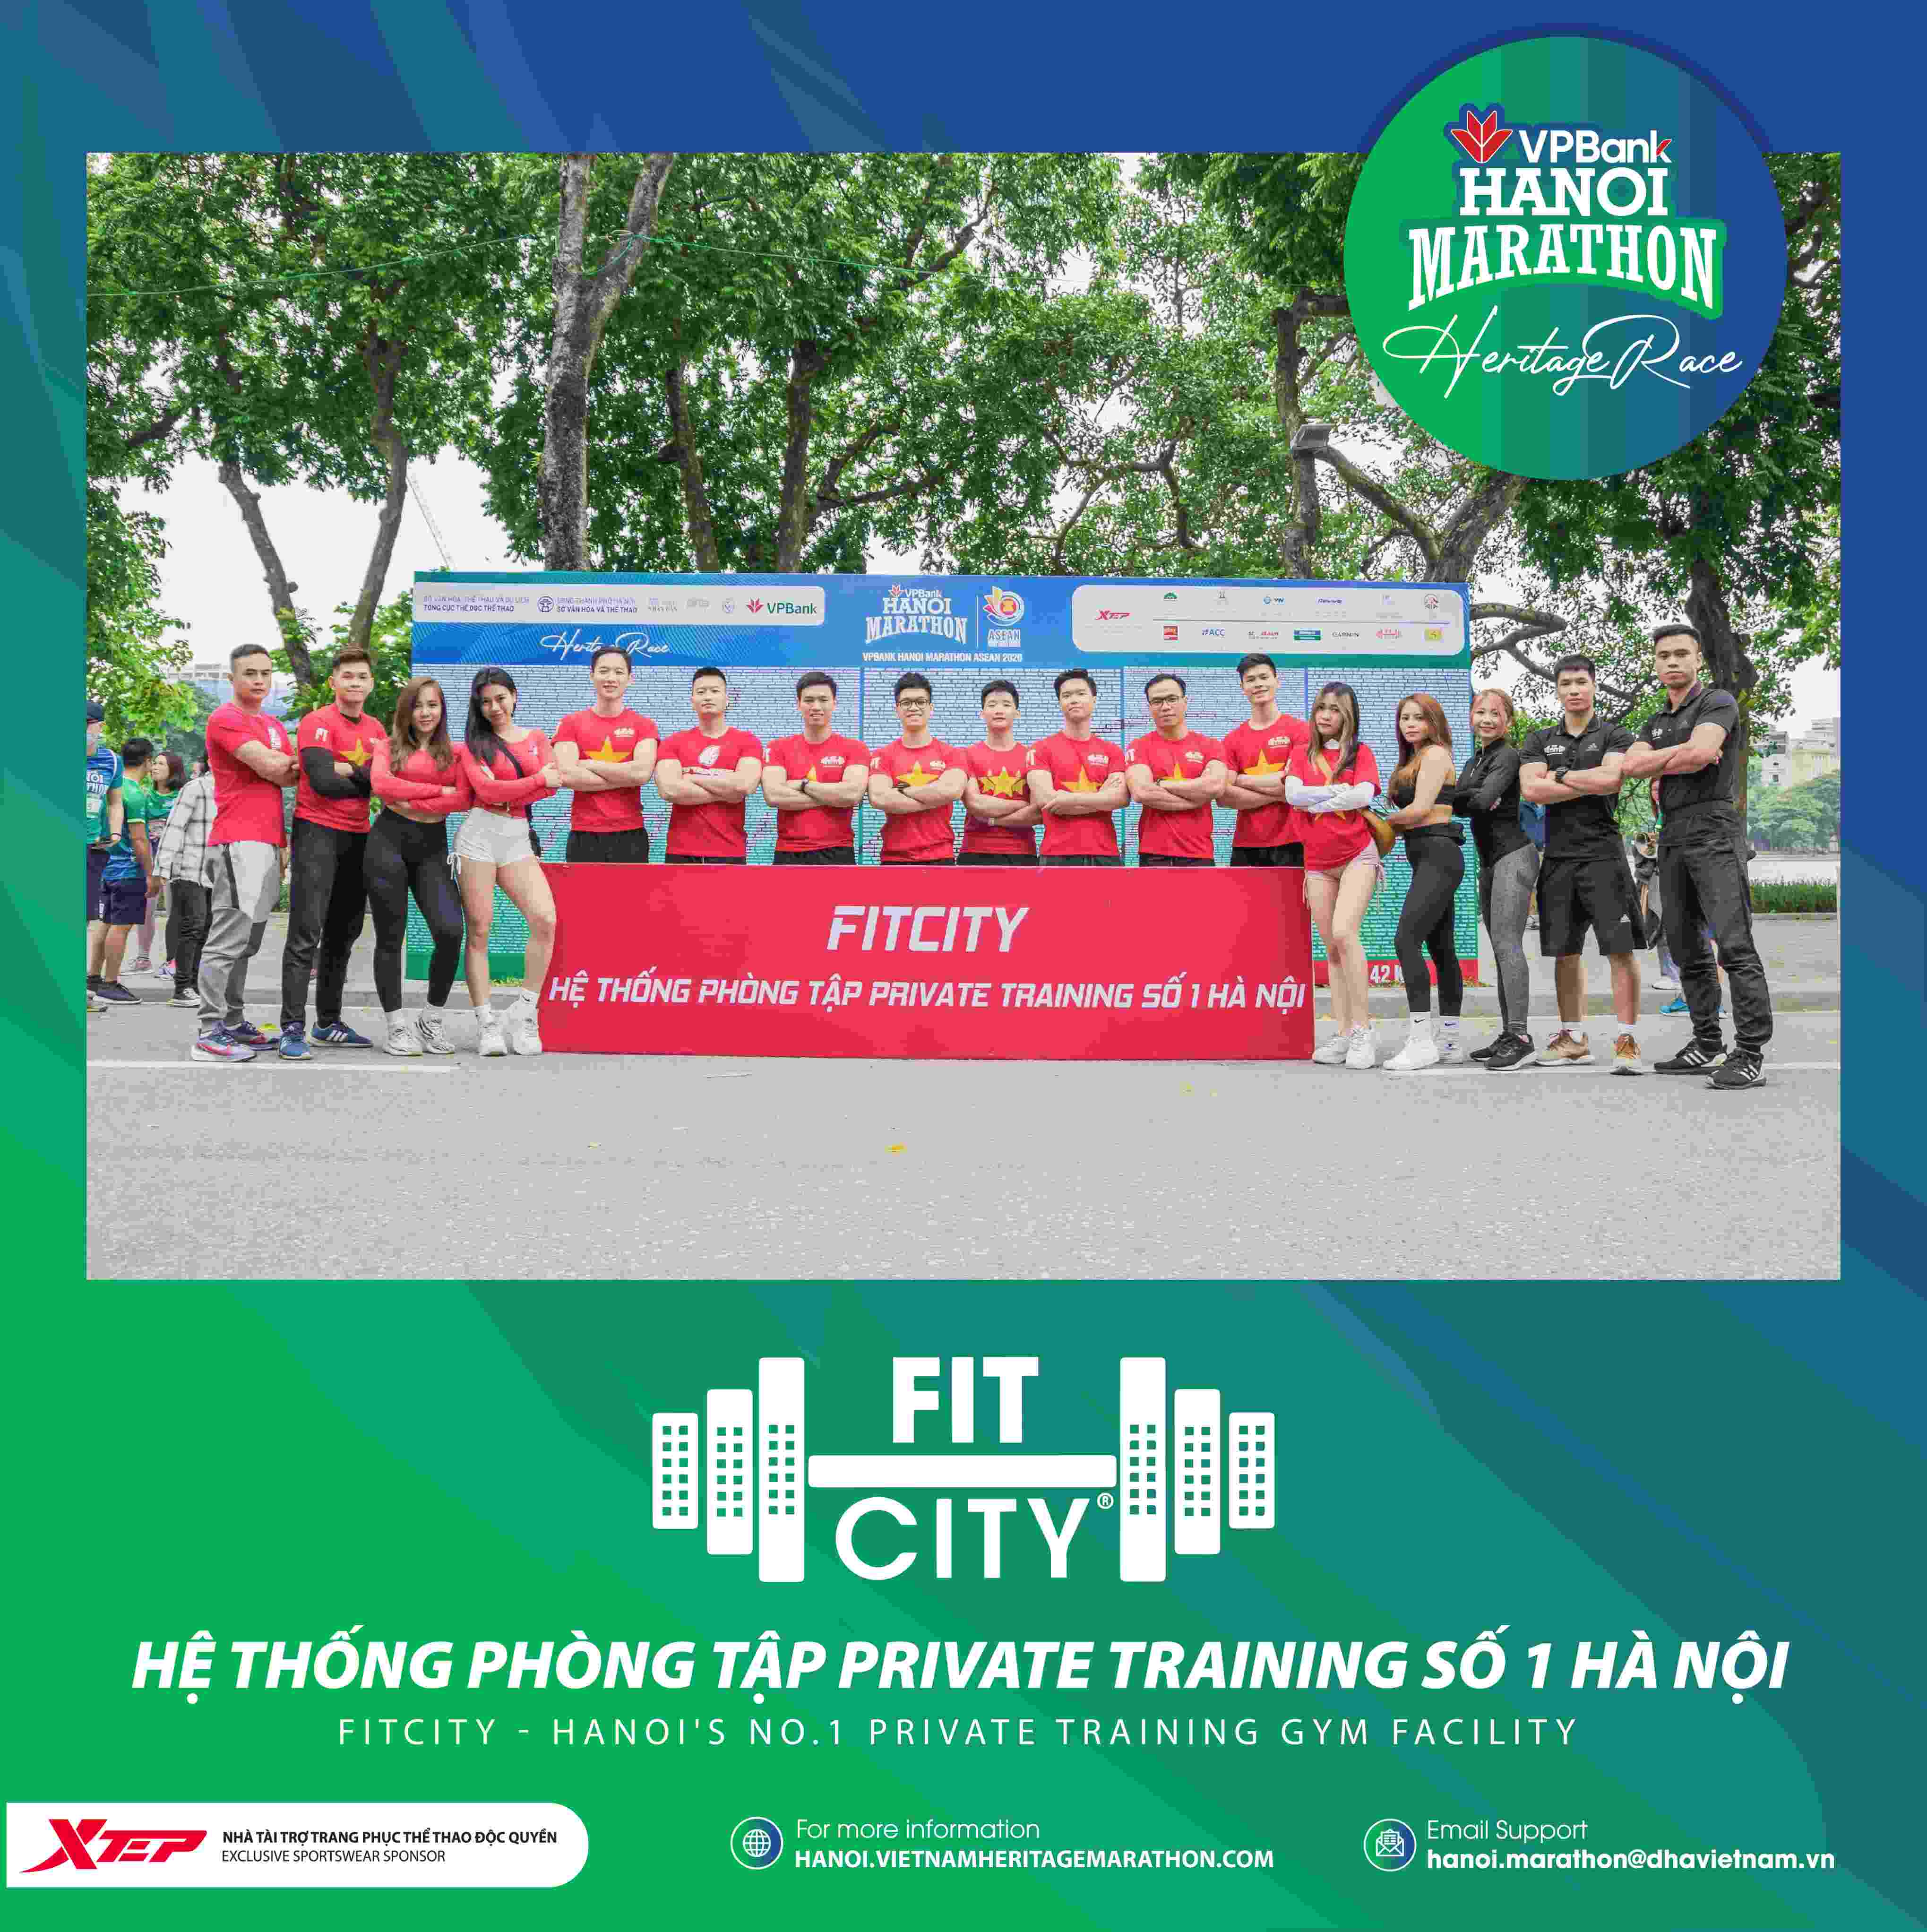 Fitcity To Take Care Of VPBank Hanoi Marathon Runners' Feet